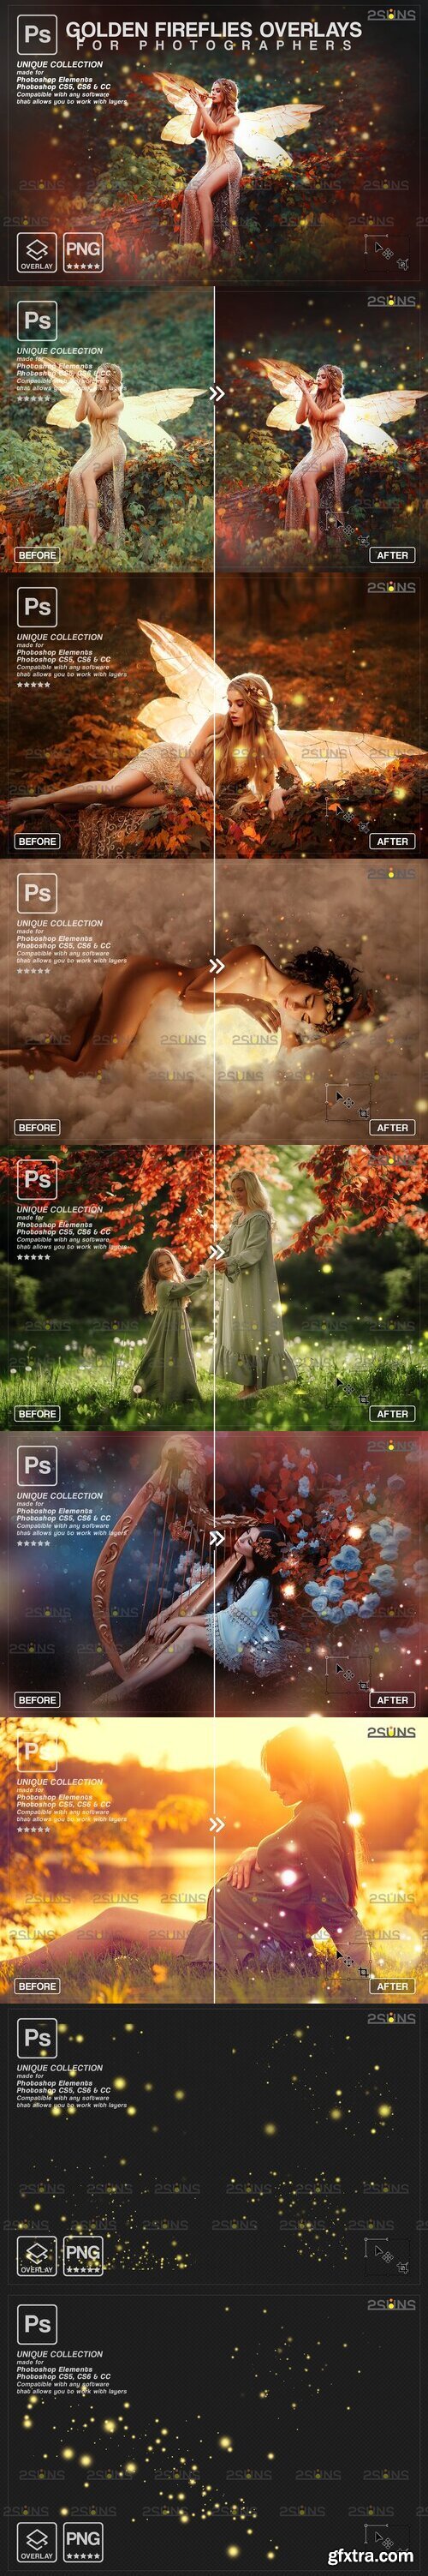 CreativeMarket - Gold Fireflies Photoshop overlay 7394445